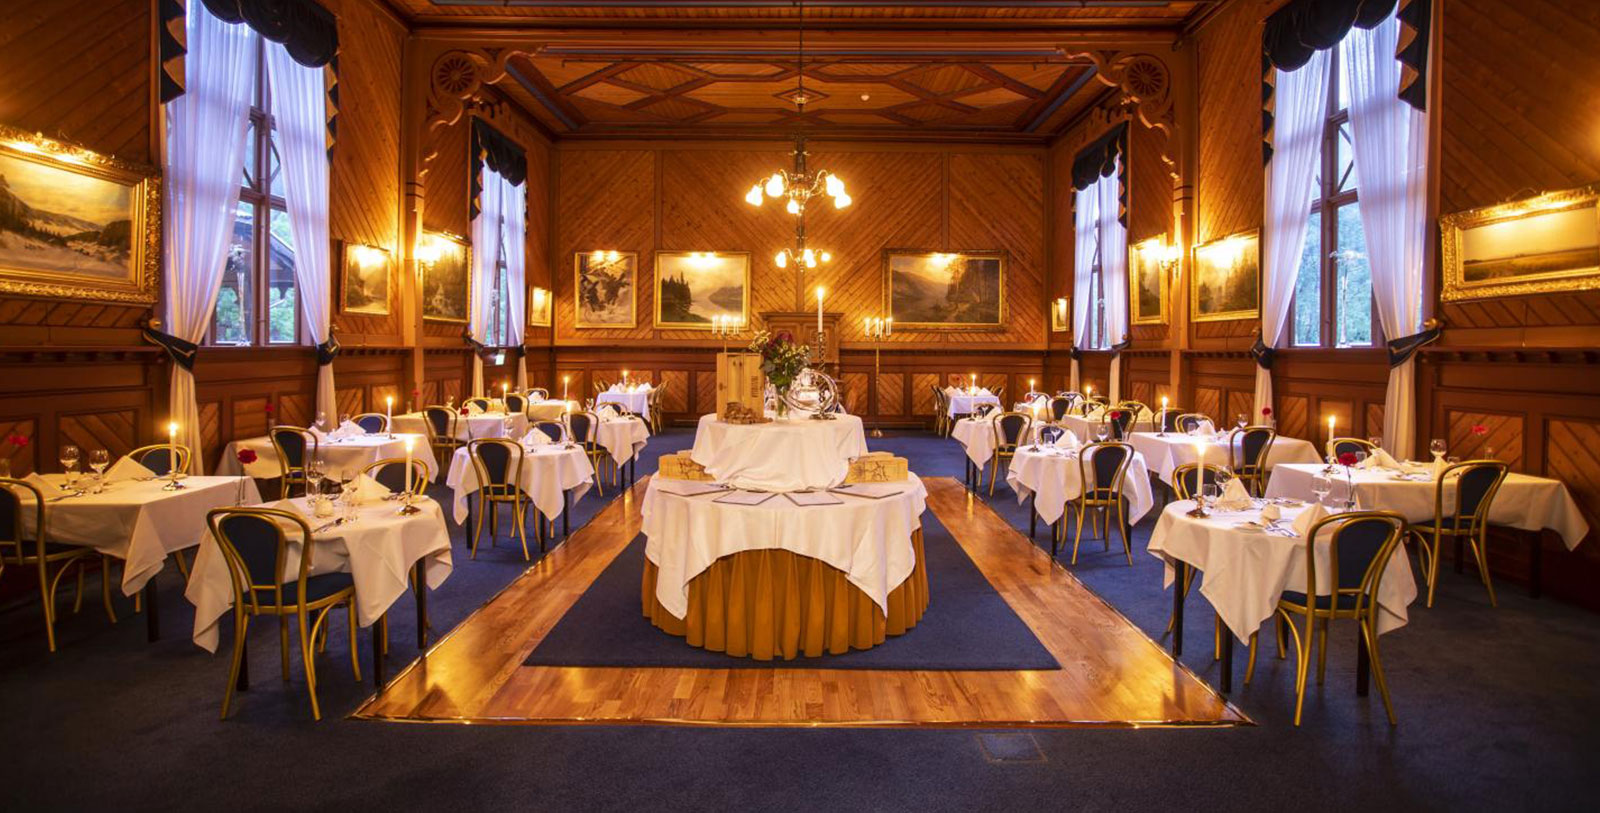 Image of Restaurant Bandak Dalen Hotel, 1894, Member of Historic Hotels Worldwide, in Dalen, Norway, Dining